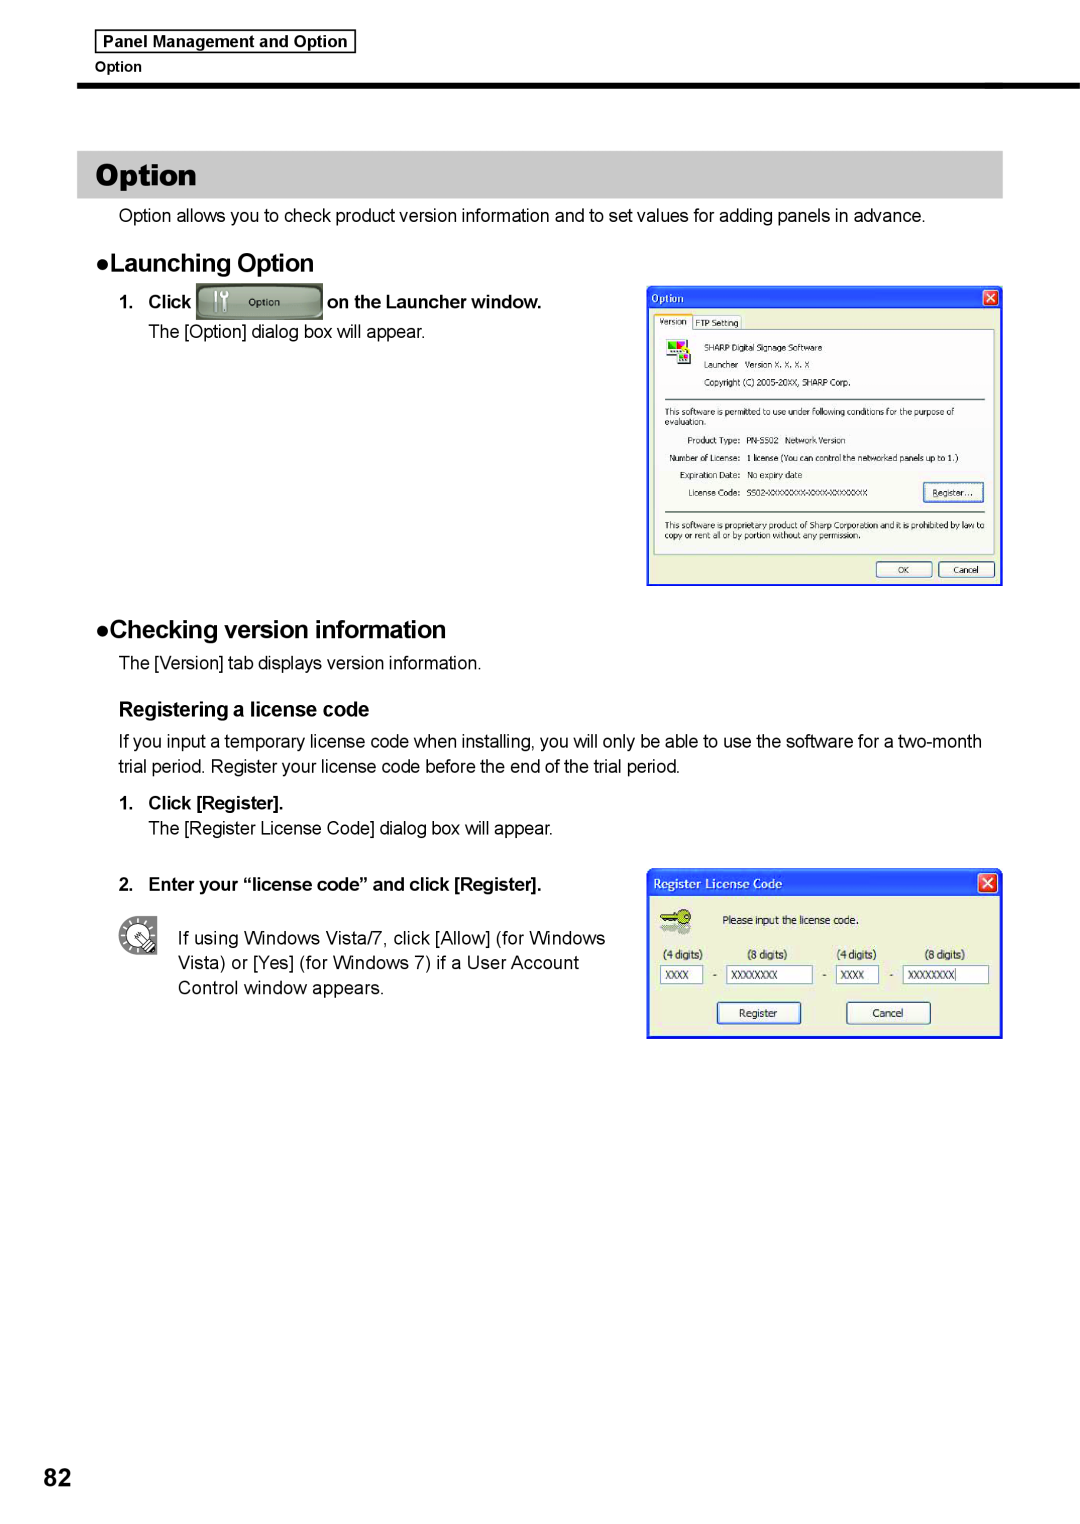 Sharp PNSV01 Launching Option, Checking version information, Registering a license code, Click Register 